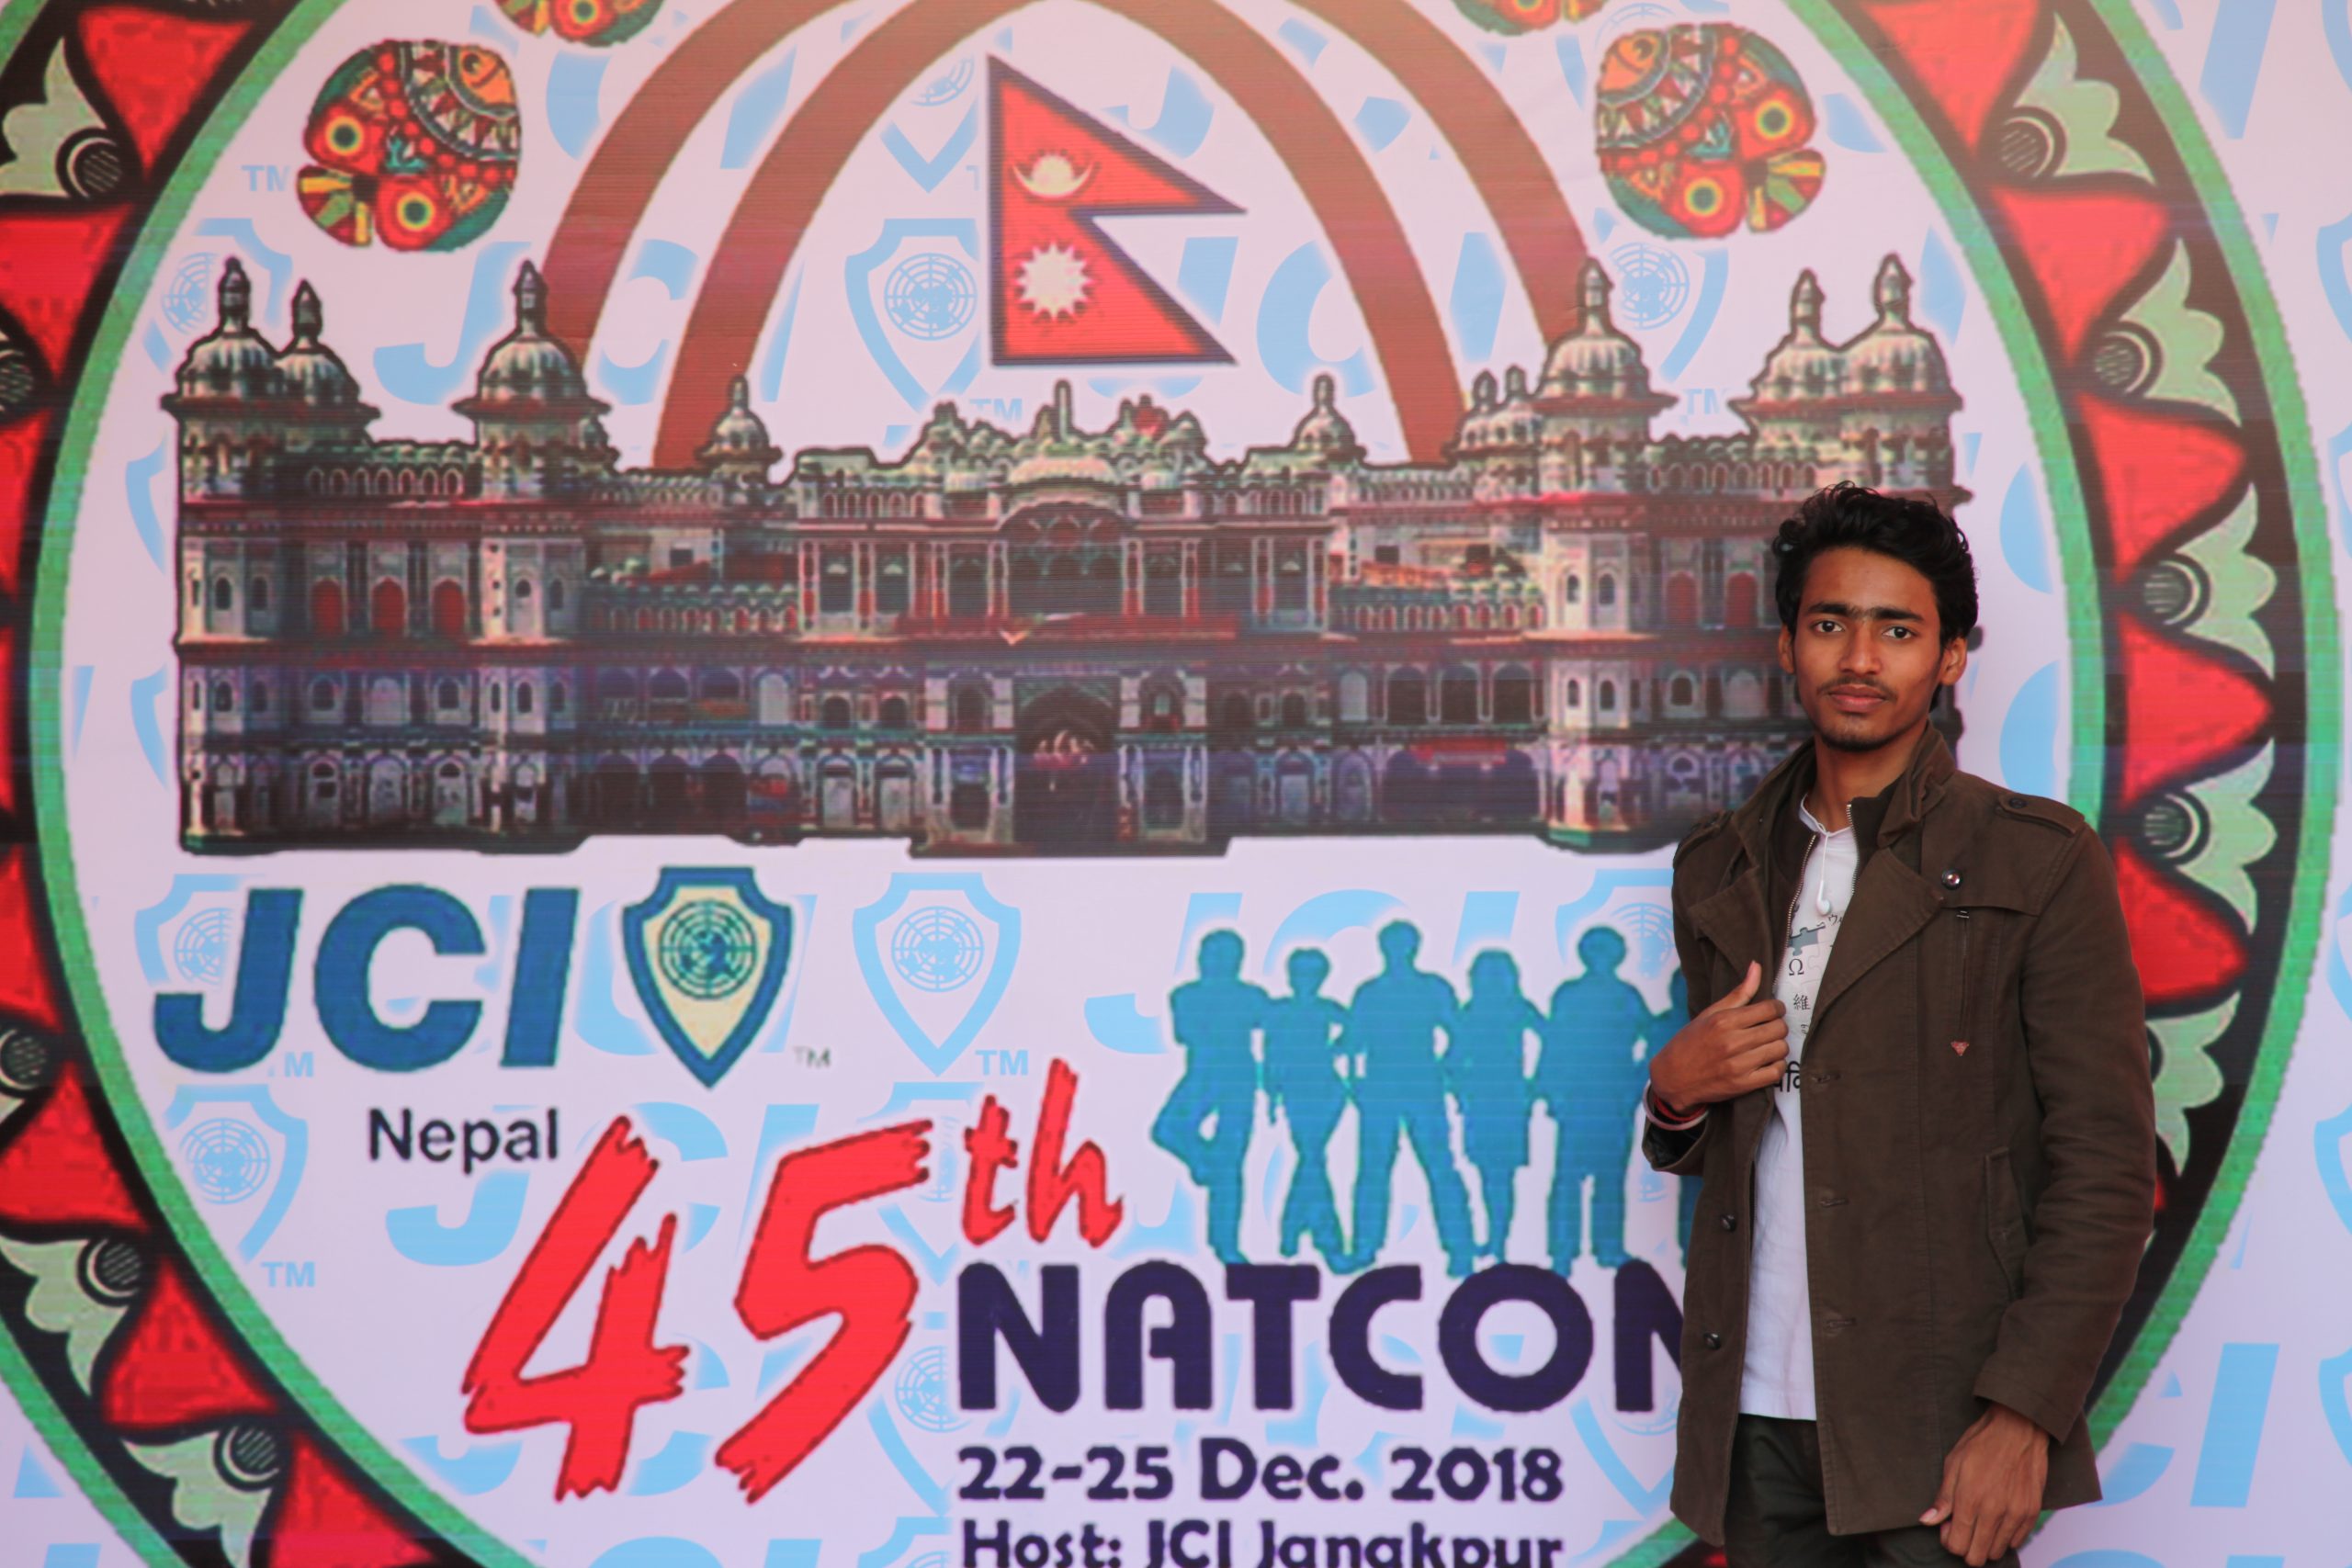 JCI-Nepal-45th-NatCon-Janakpur-Tulsi-Bhagat-scaled